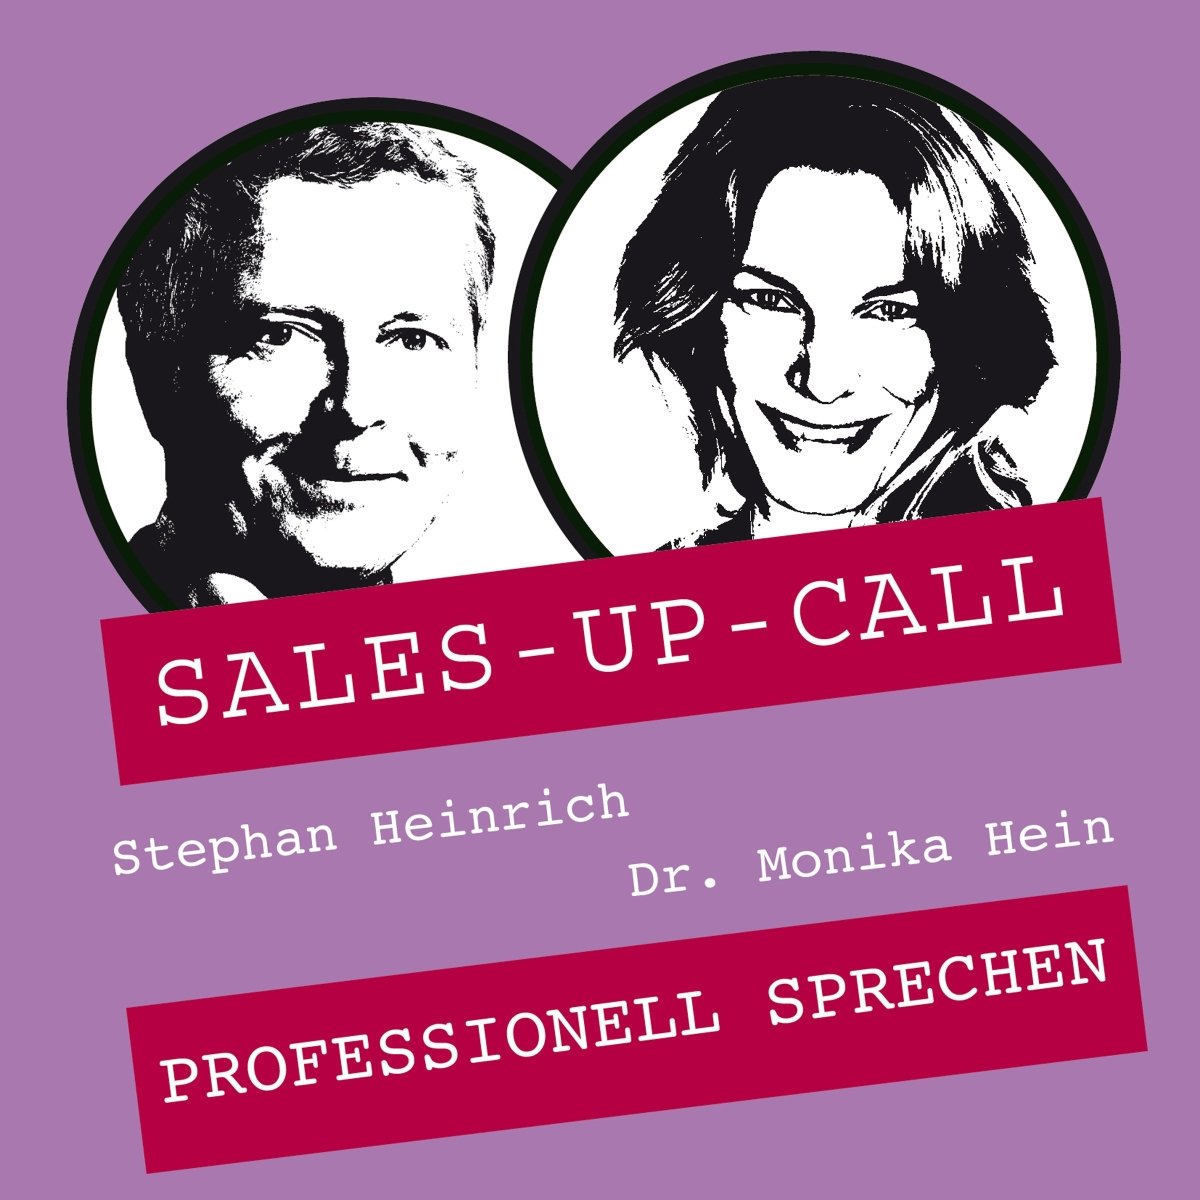 Professionell sprechen - Sales-up-Call - Stephan Heinrich